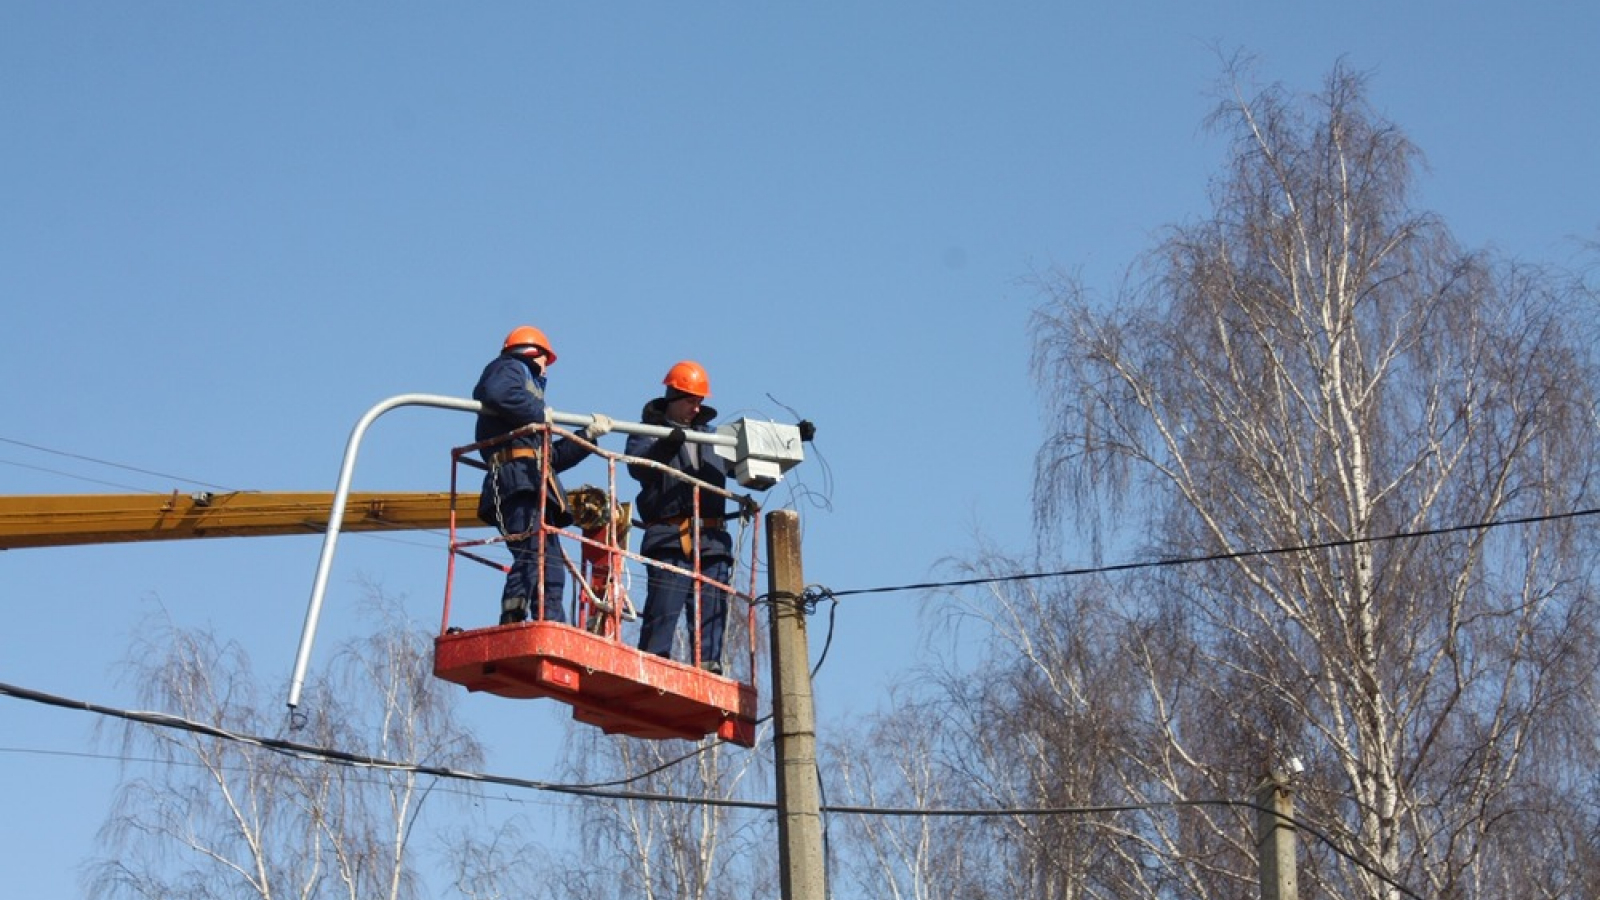 Belarus: New energy efficient street lighting installed in Polack thanks to EU